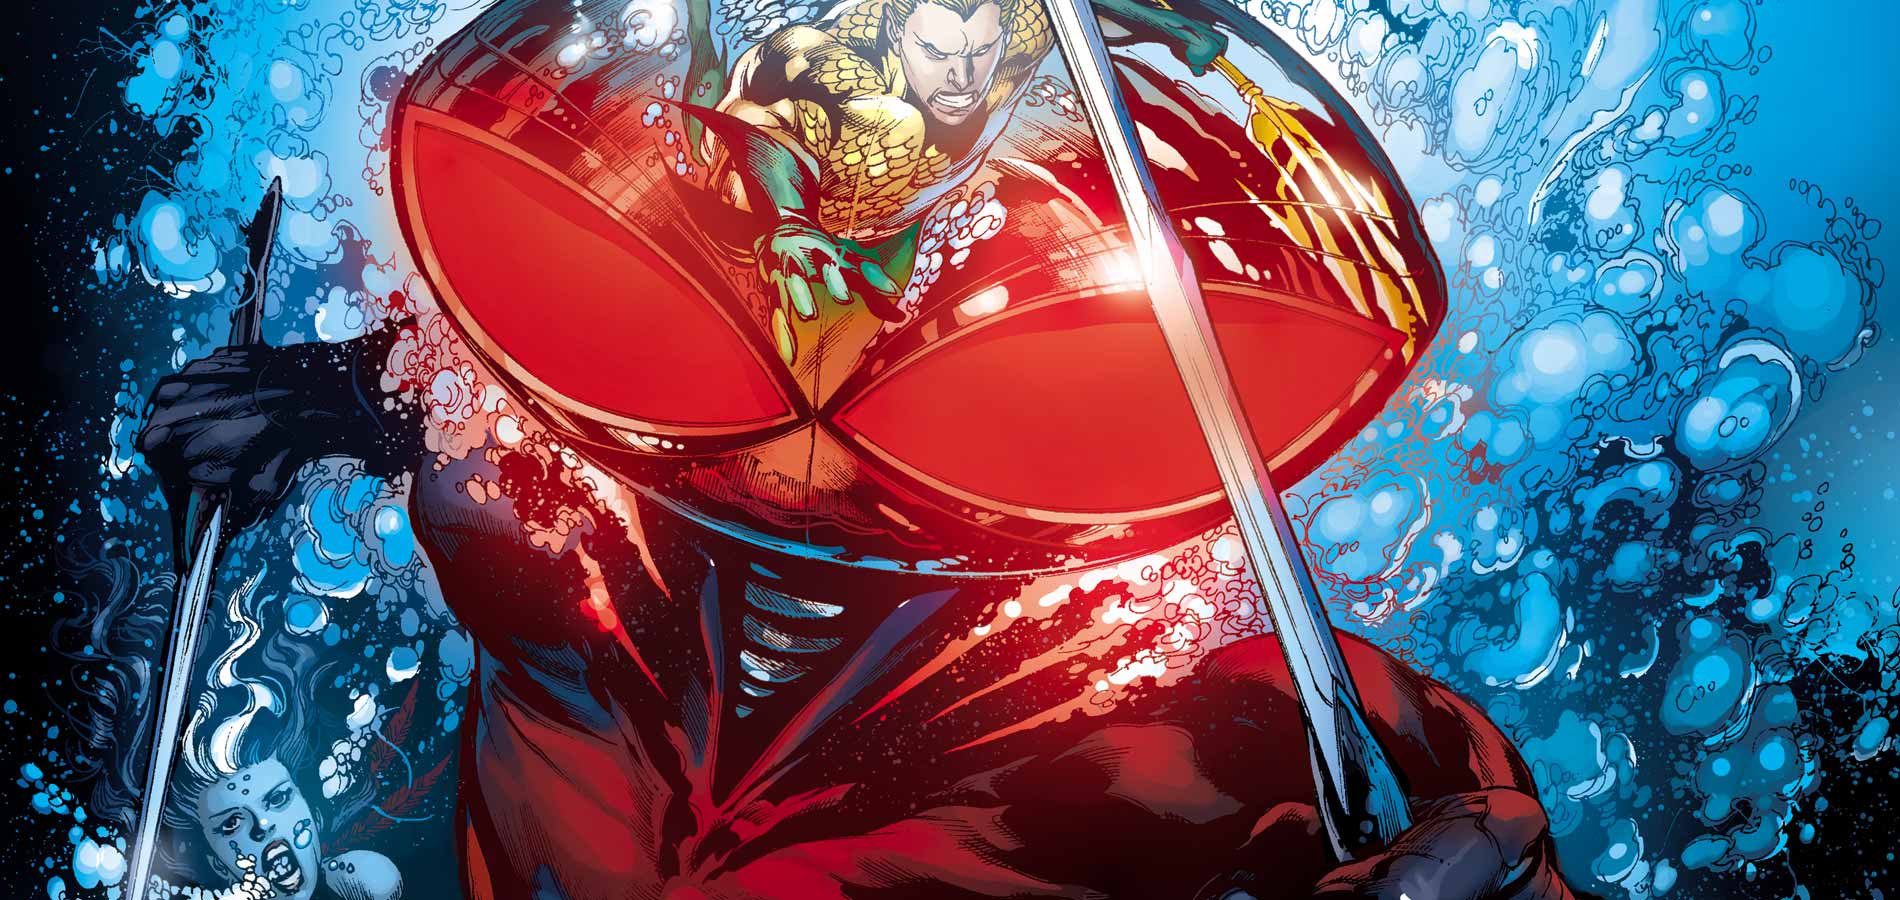 James Wan hints at a classic look for supervillain Black Manta